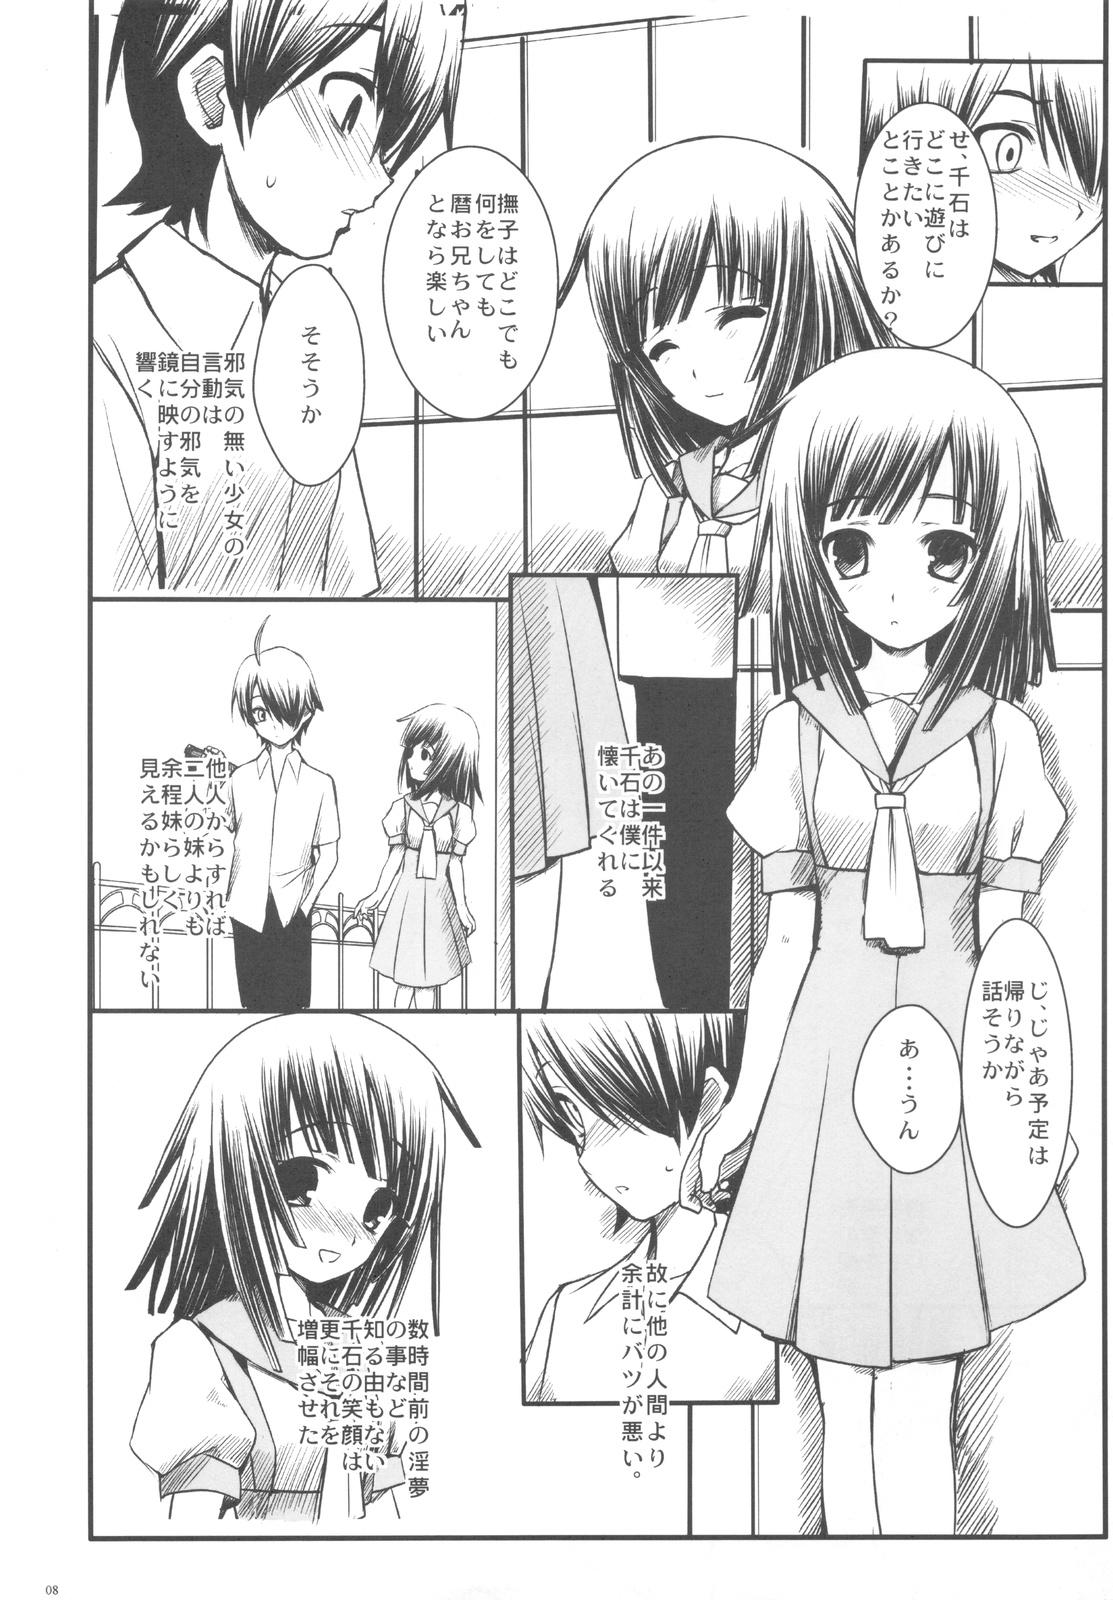 Tit SENGOKU FROG - Bakemonogatari 8teenxxx - Page 8